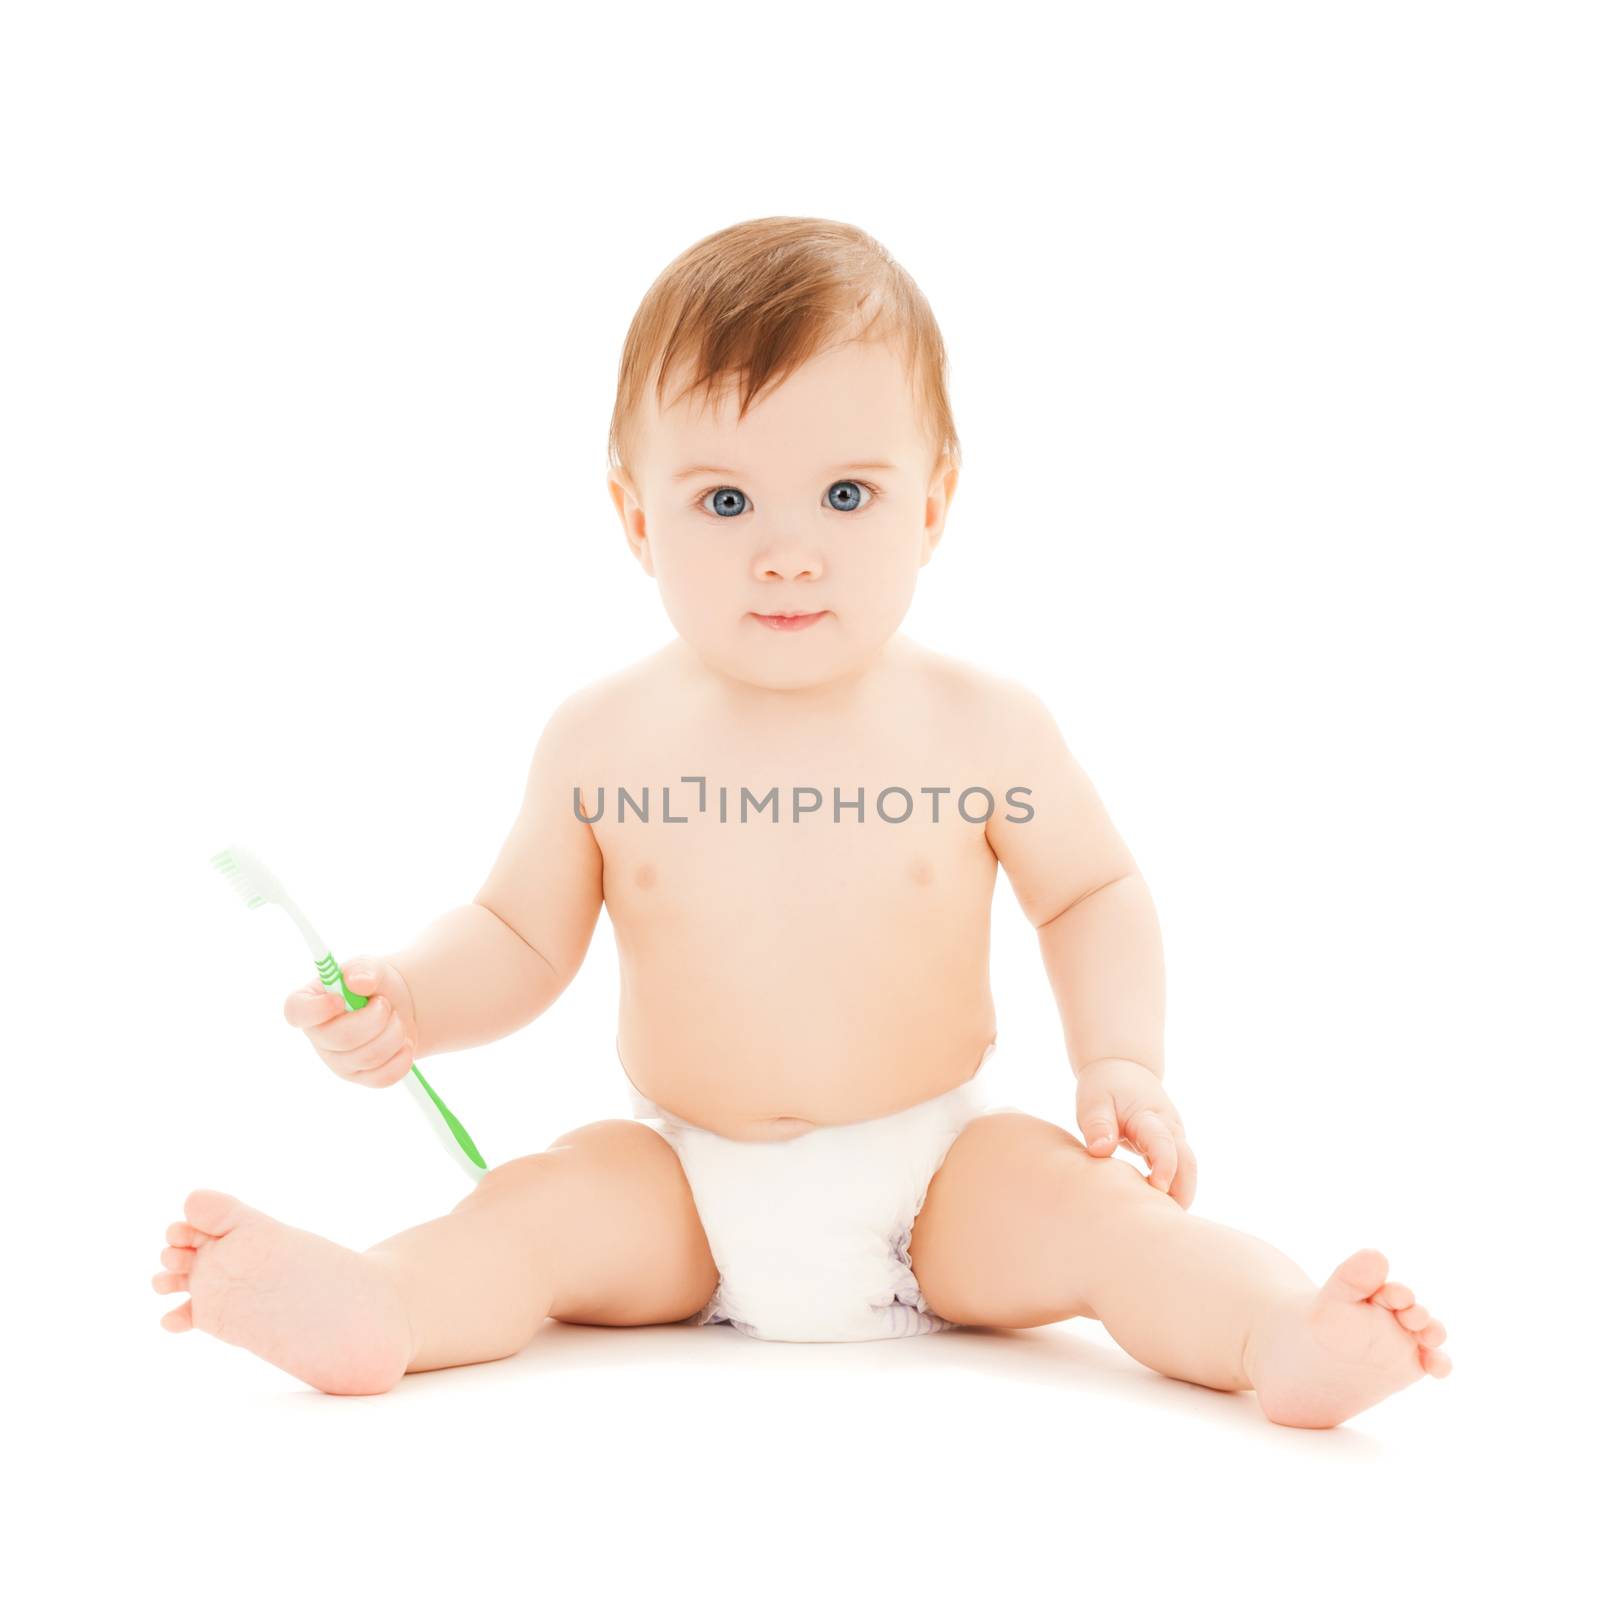 curious baby brushing teeth by dolgachov